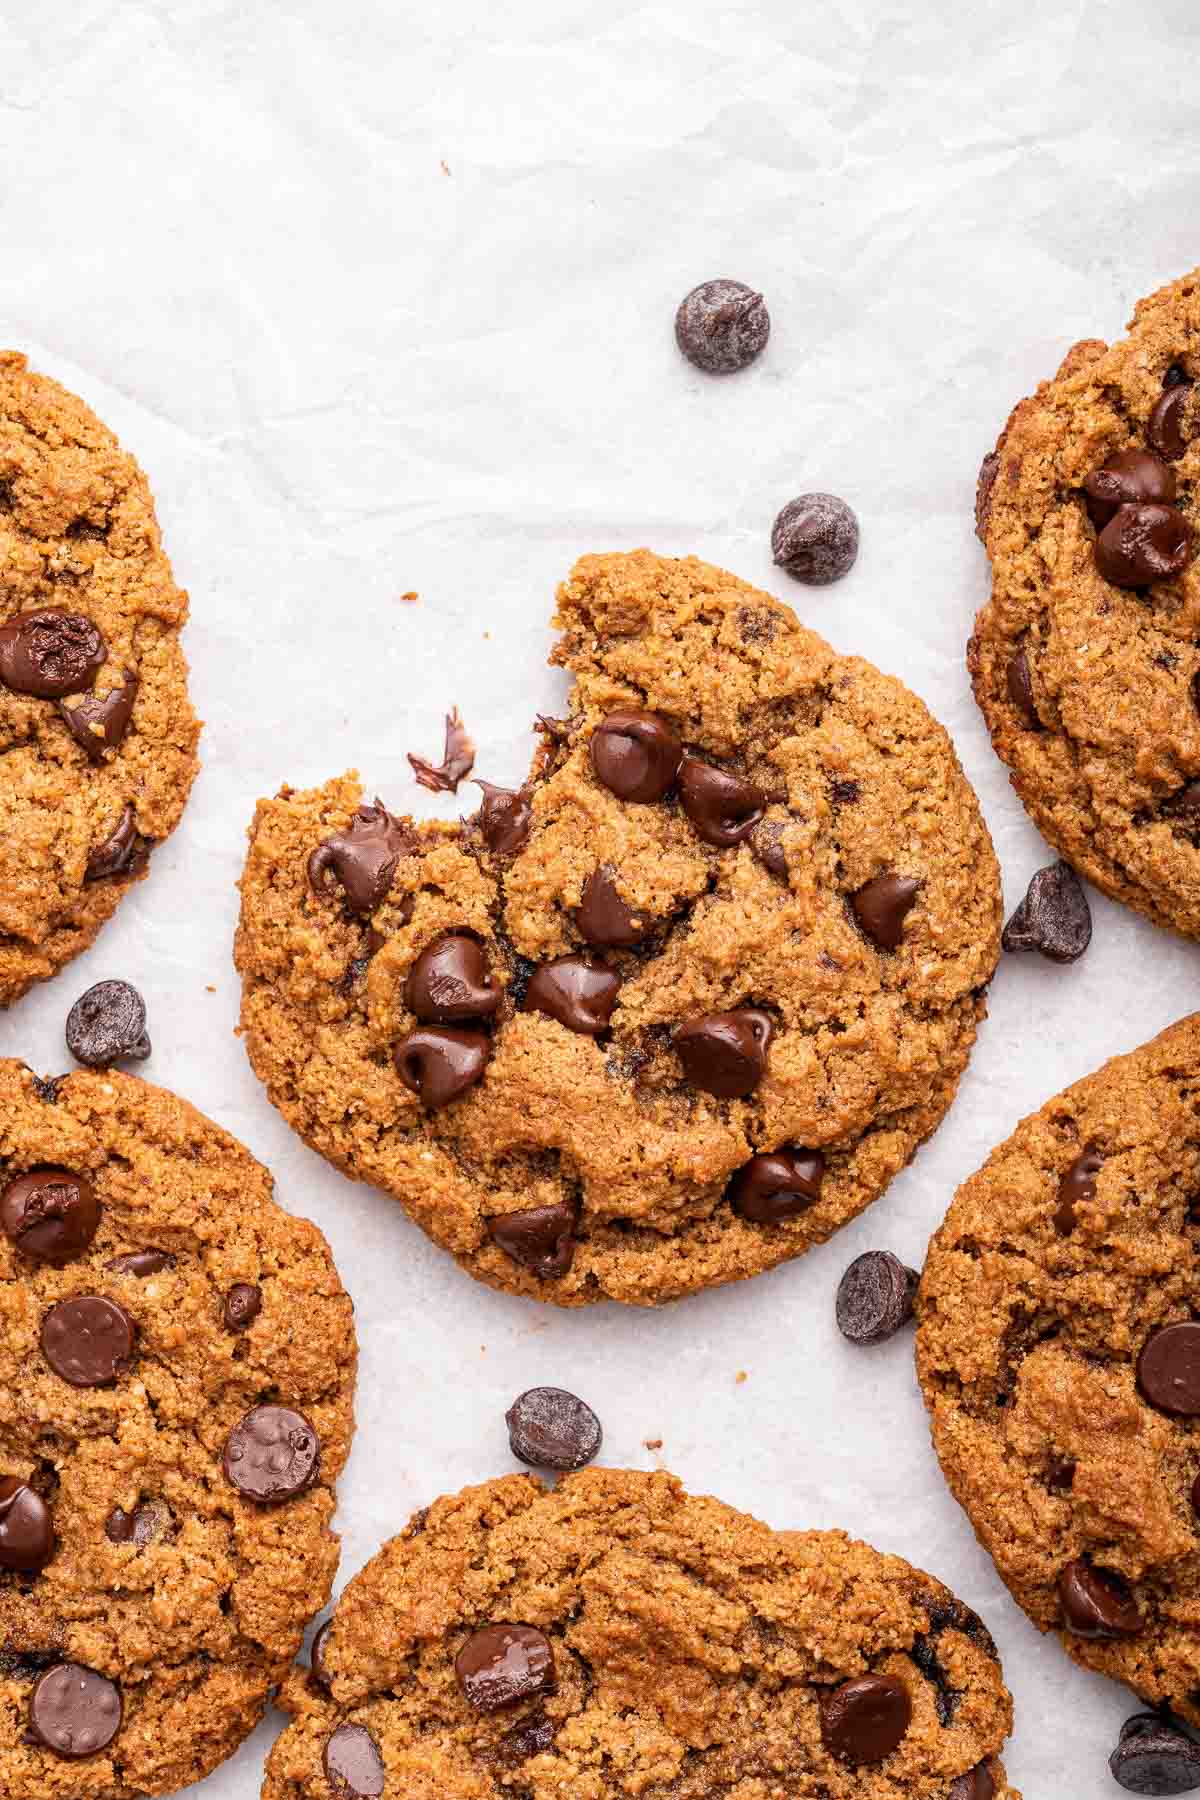 https://www.dessertfortwo.com/wp-content/uploads/2019/05/Almond-Flour-Chocolate-Chip-Cookies-10.jpg